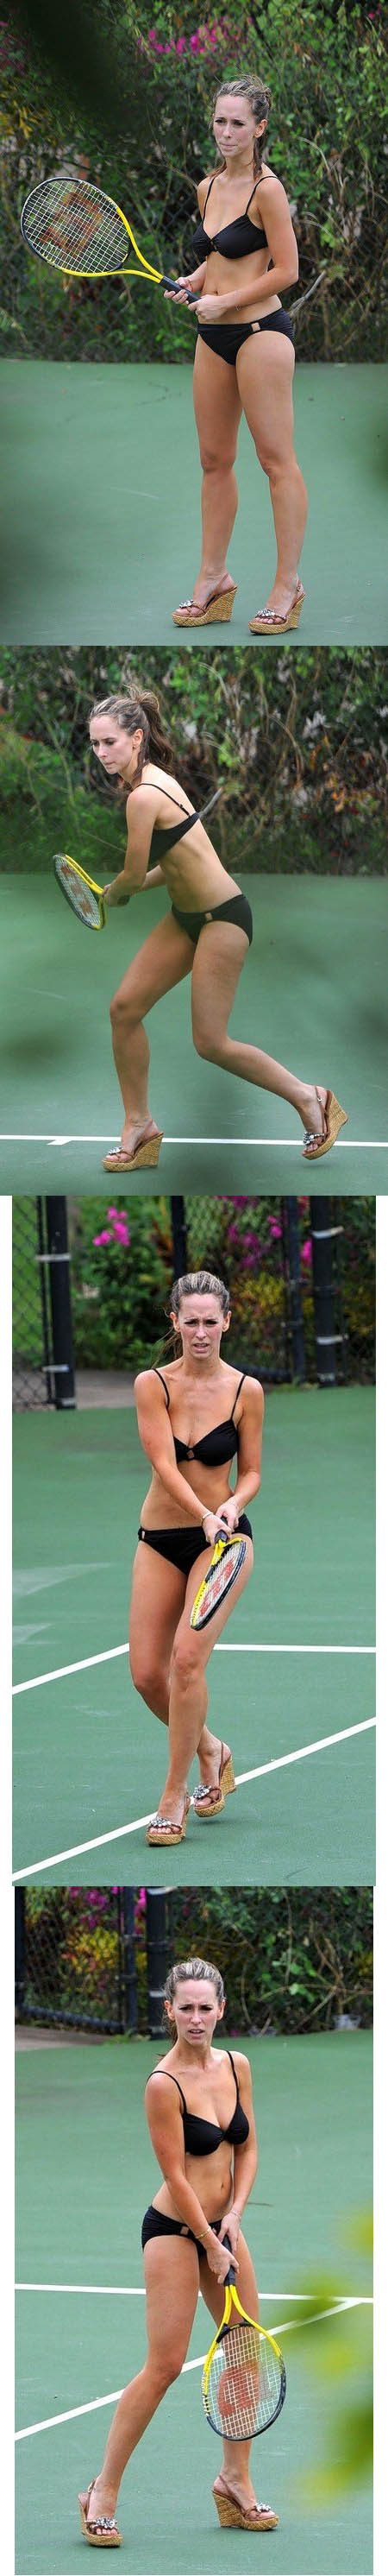 Jennifer Love Hewitt joue au tennis en maillot de bain